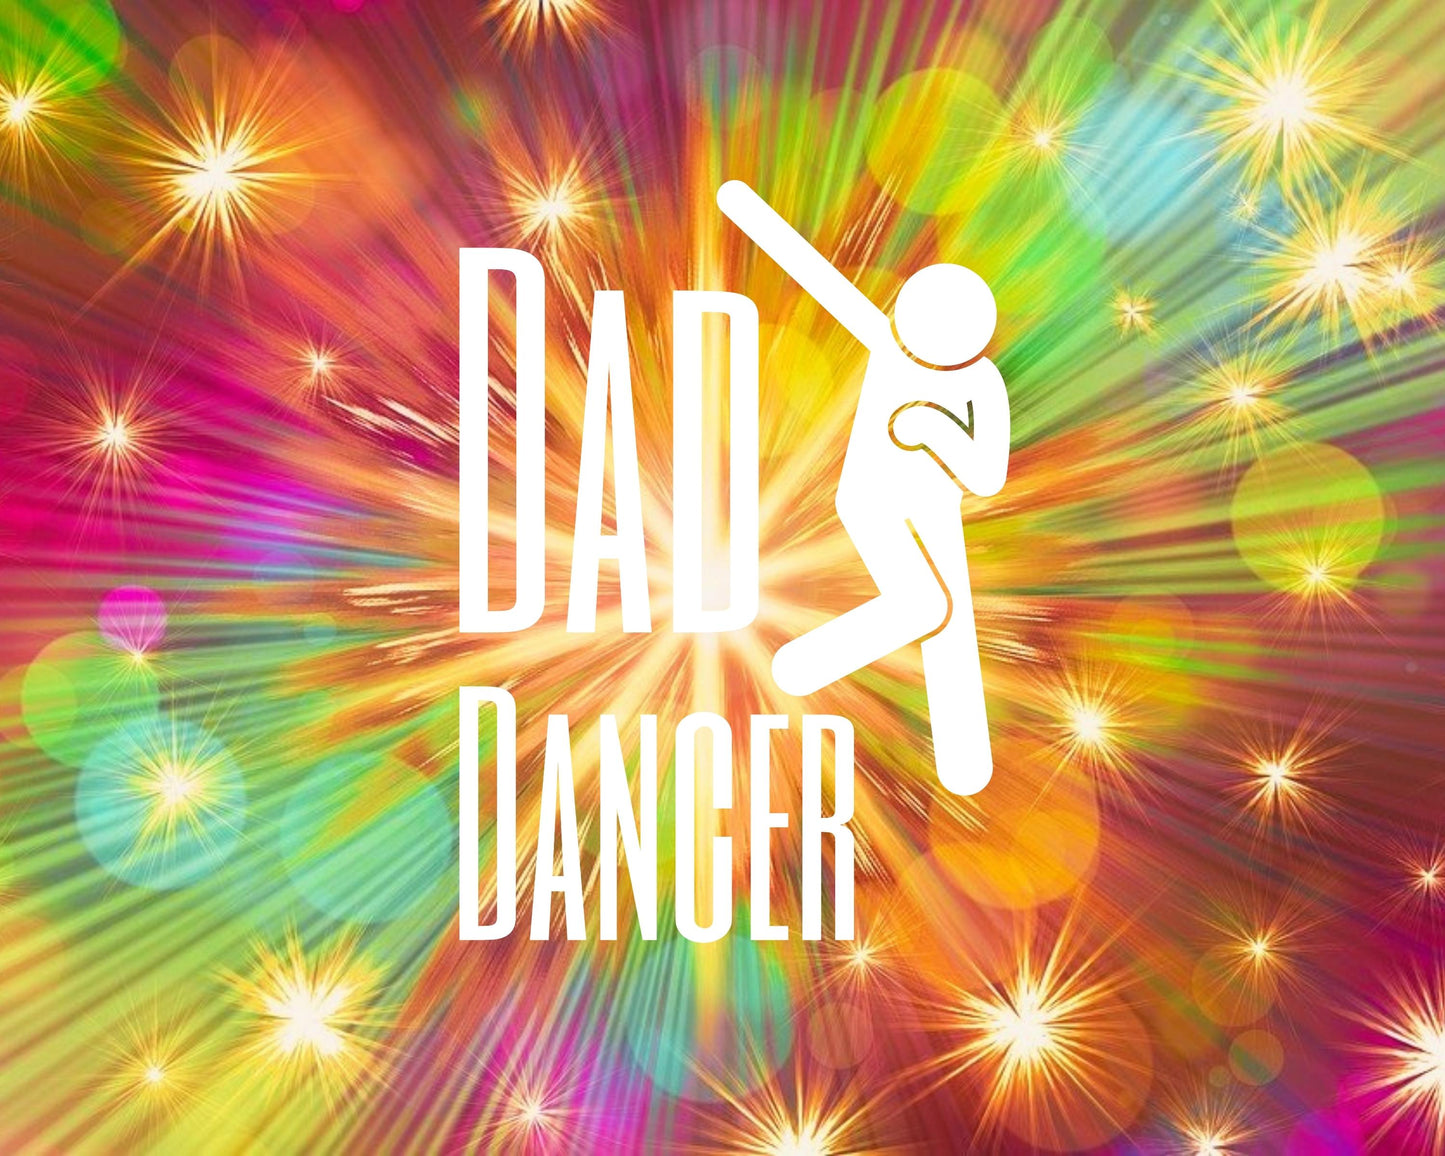 Dad Dancer: Part 1